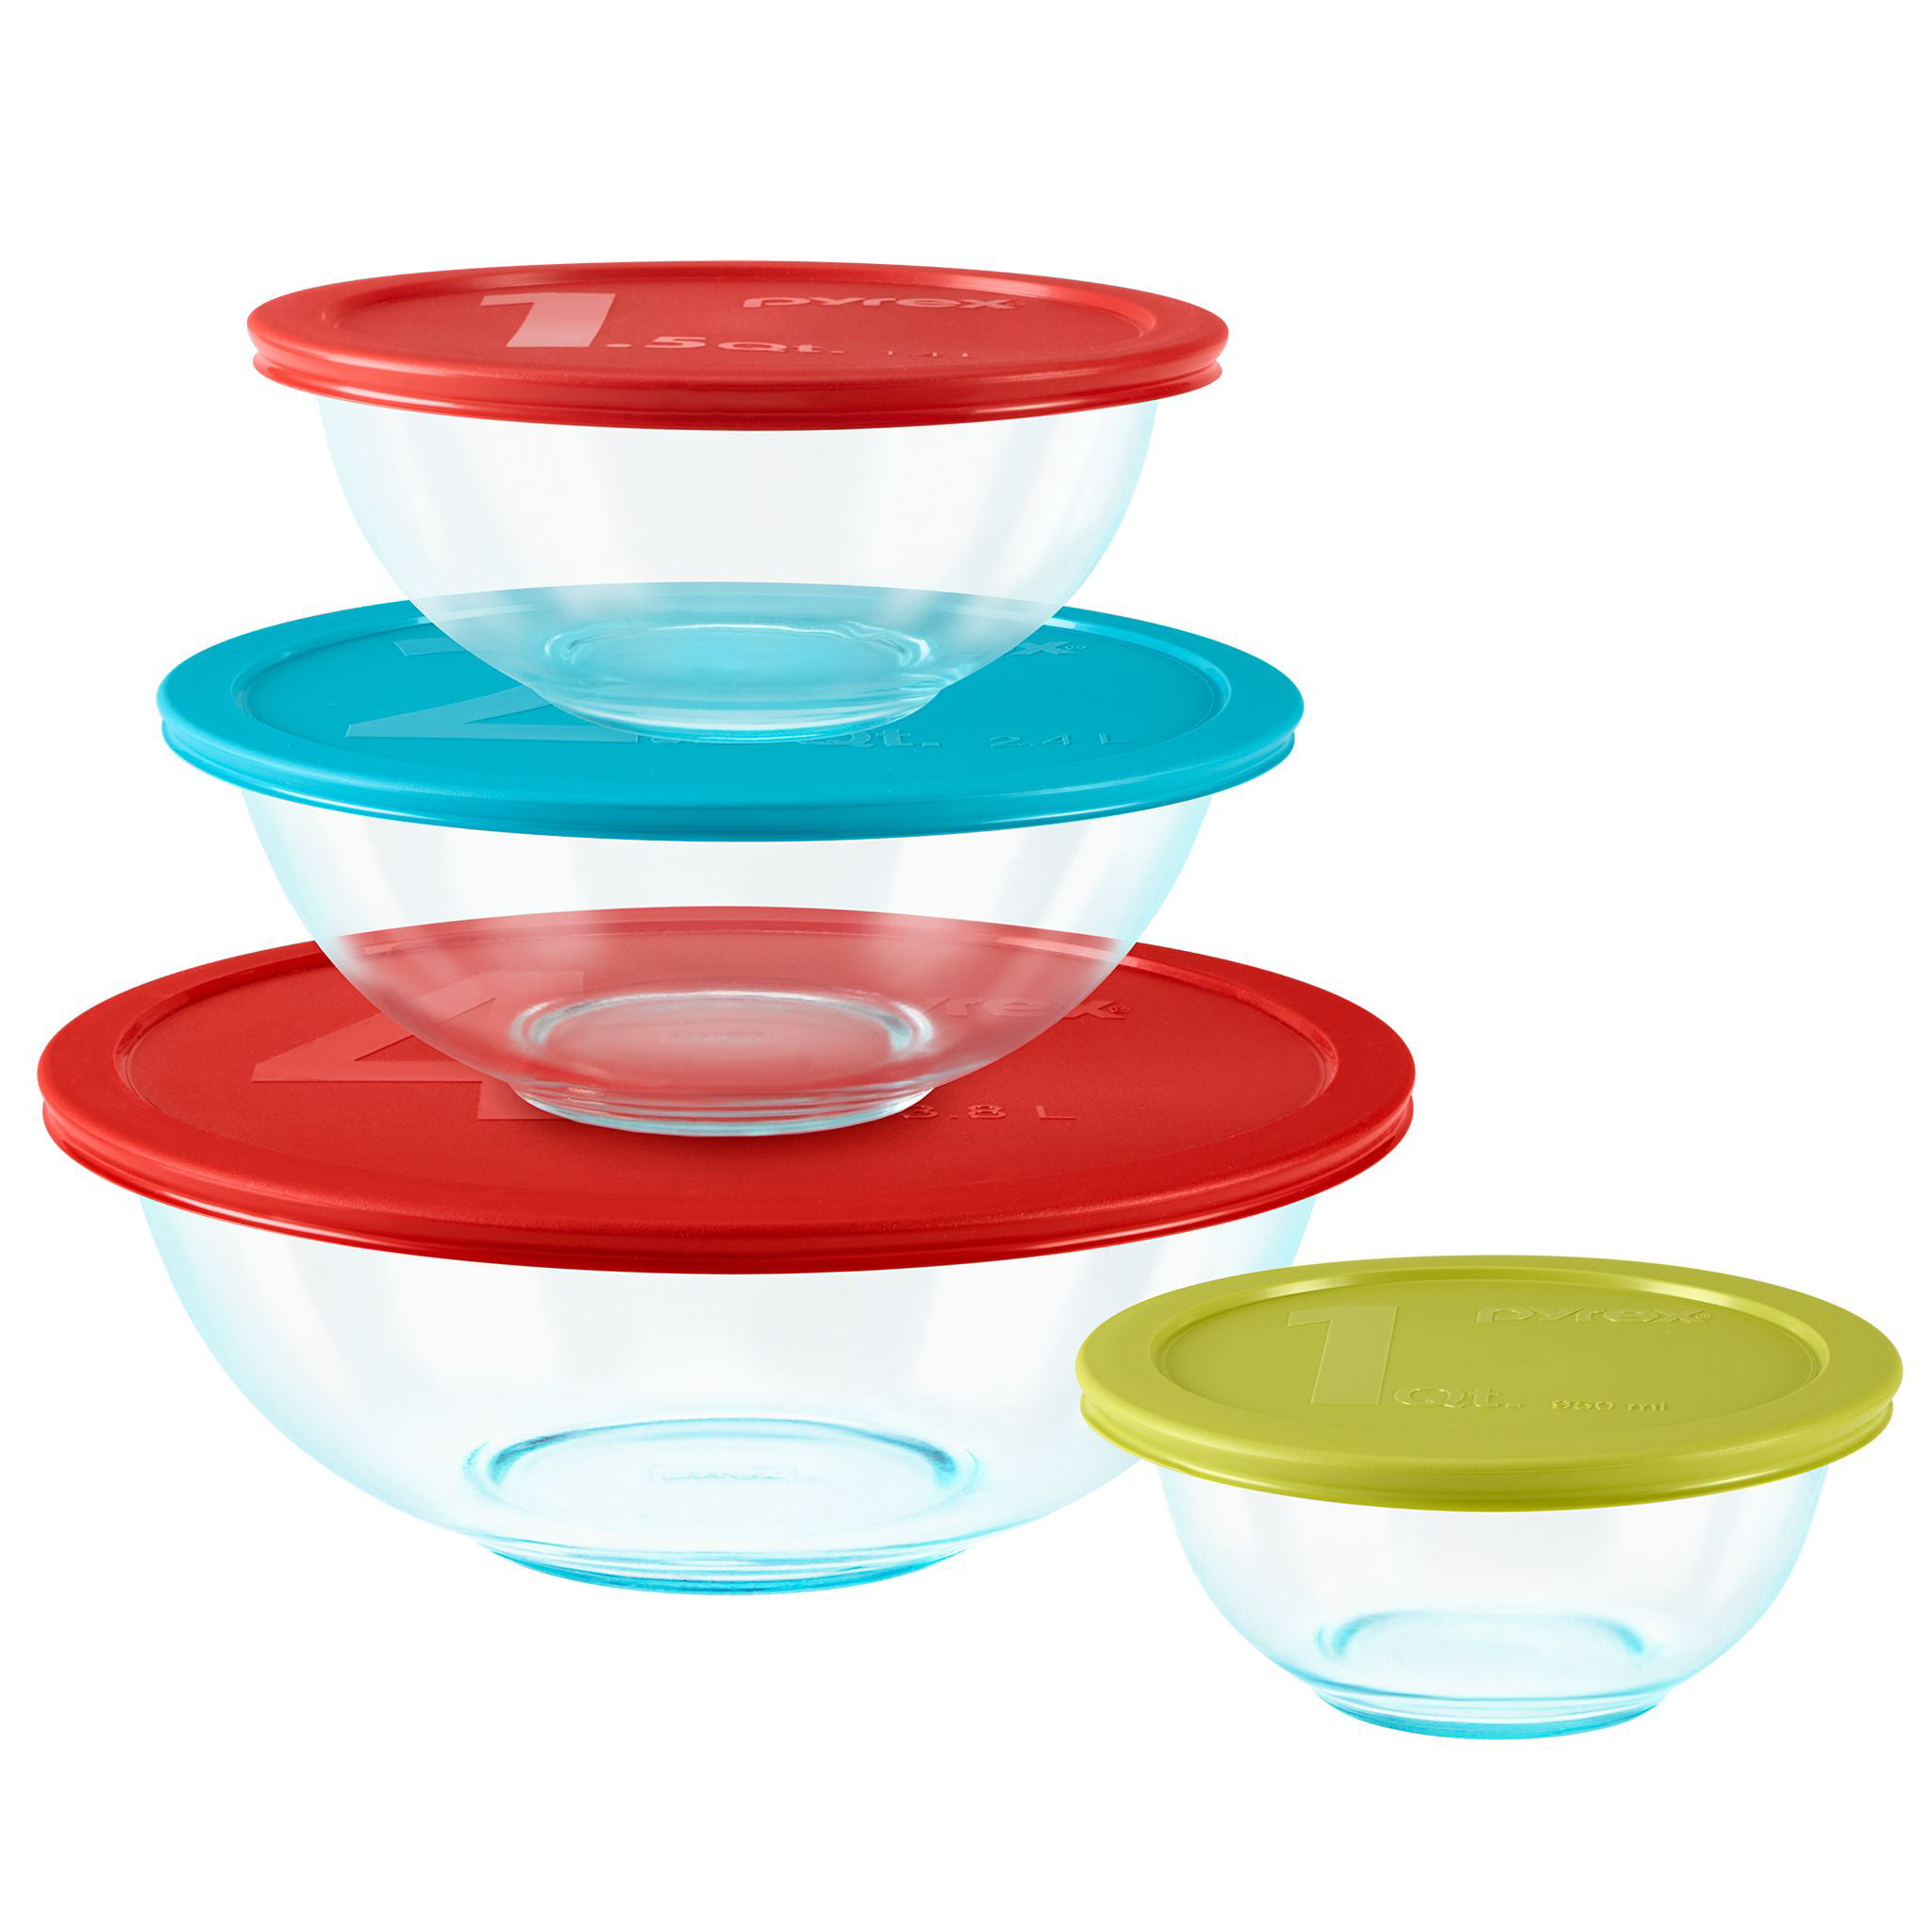 pyrex glass bowls with lids set